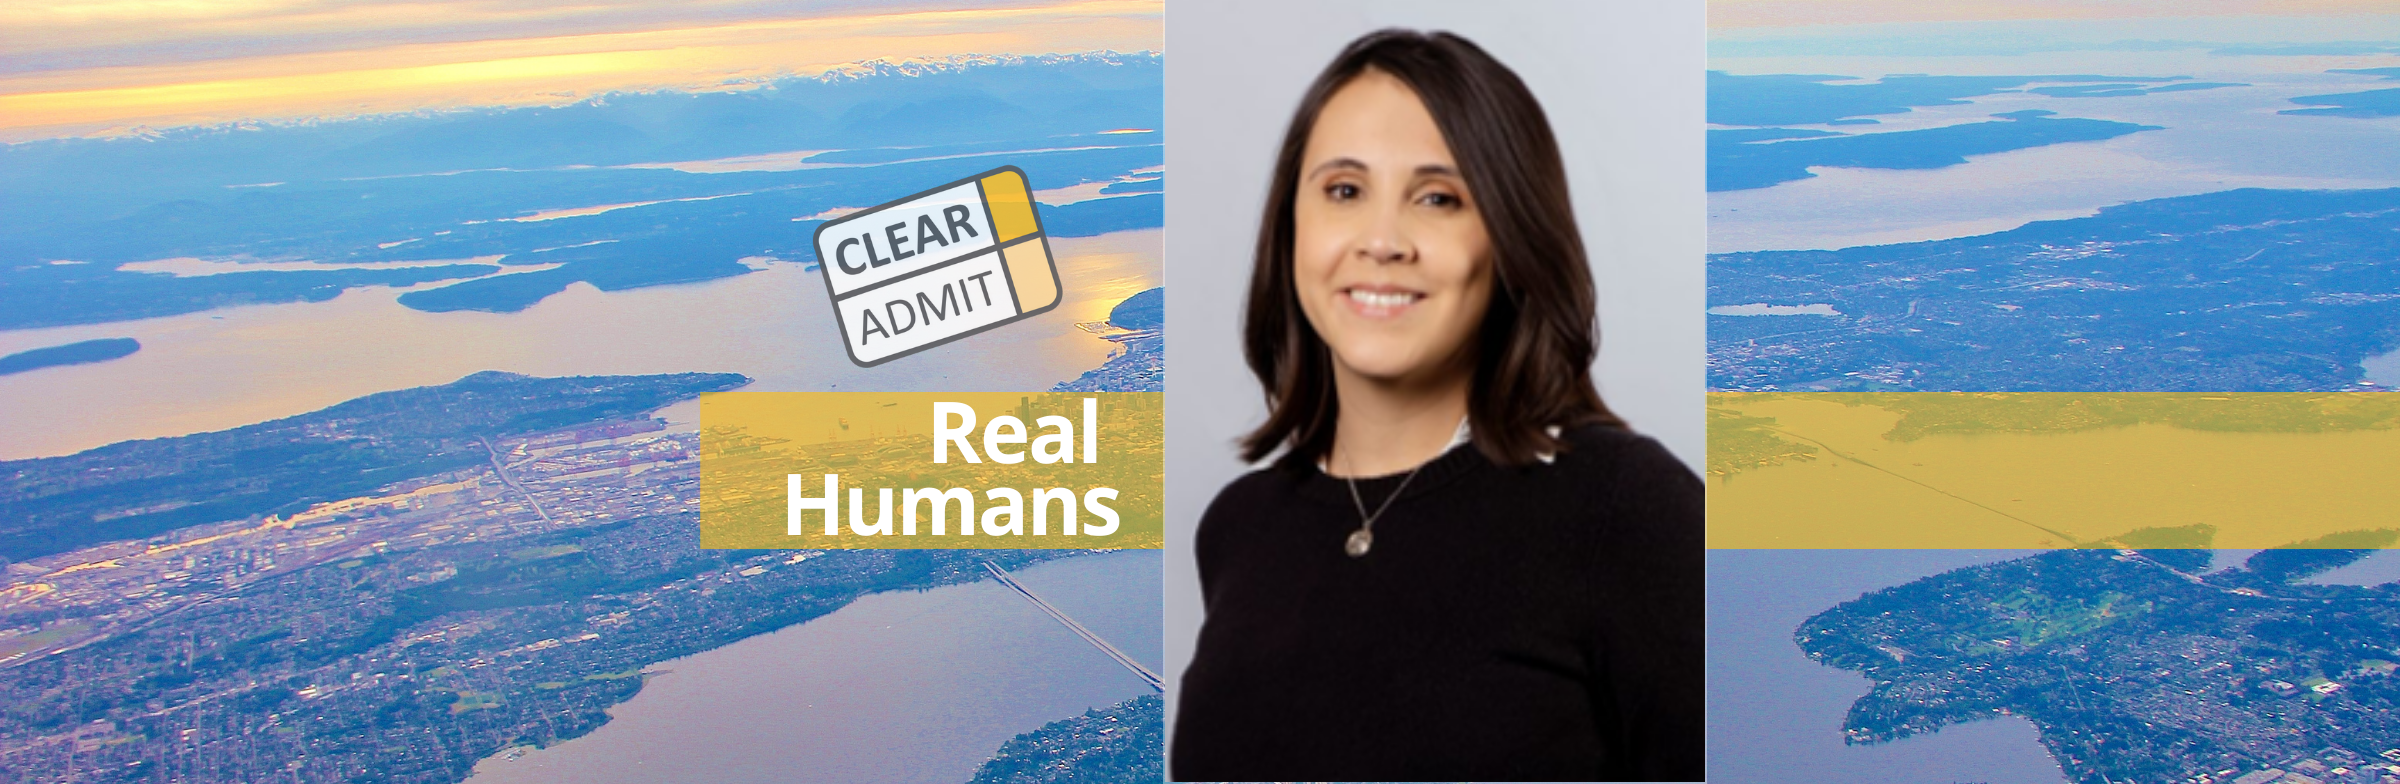 Image for Real Humans of Microsoft: Nathalia Borges, Duke Fuqua MBA ’21, Product Marketing Manager | Cloud Business